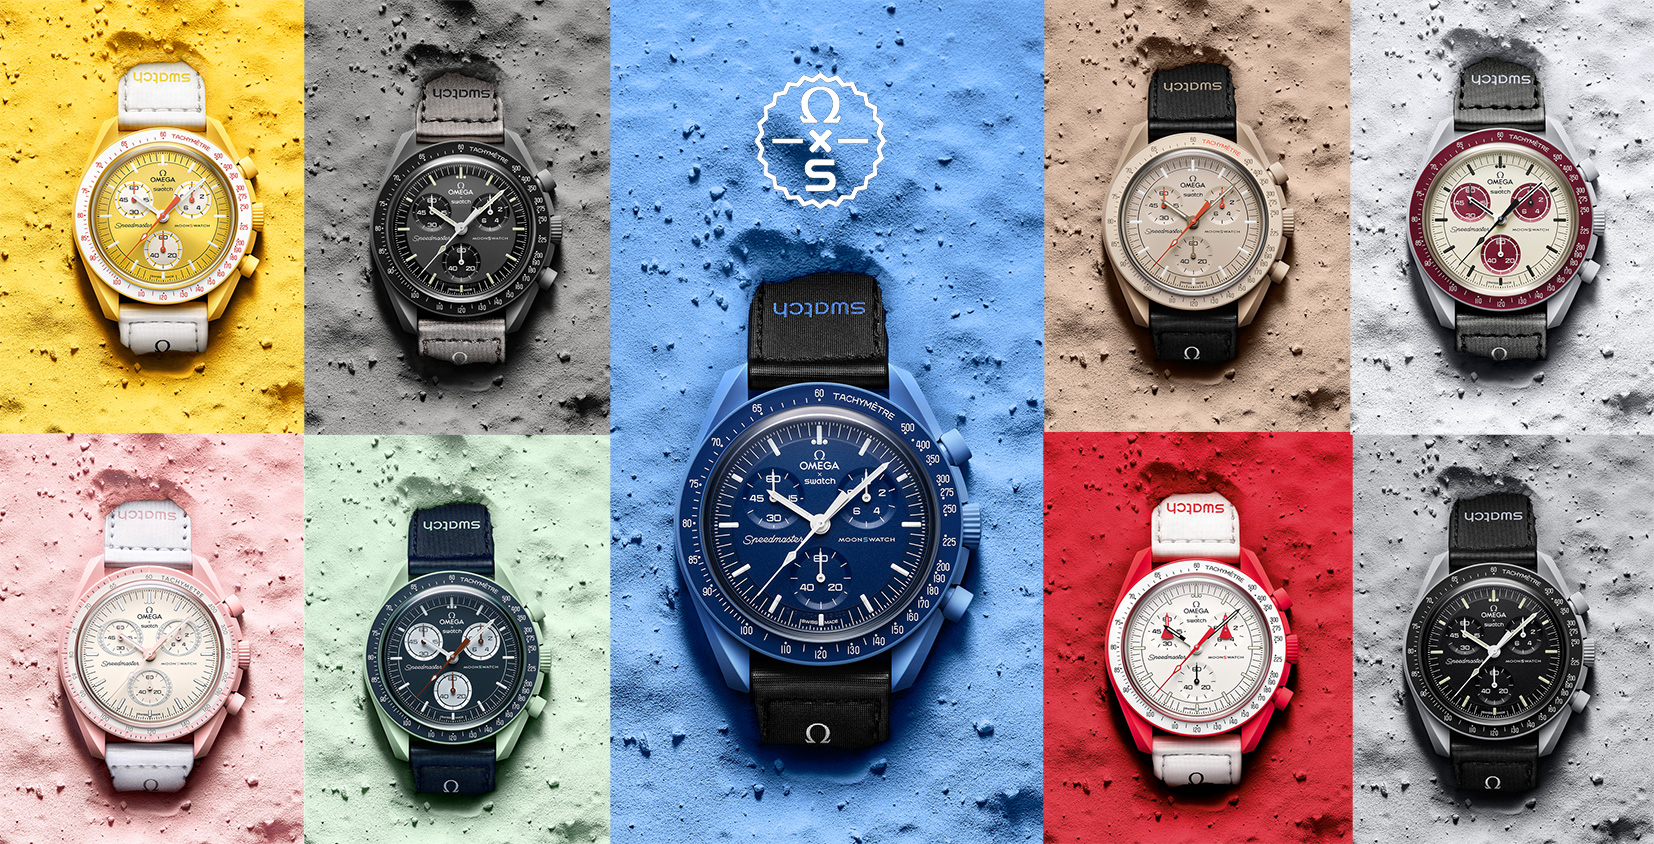 OMEGA 与SWATCH 首次联名打造11 款BIOCERAMIC #MoonSwatch 系列腕錶 